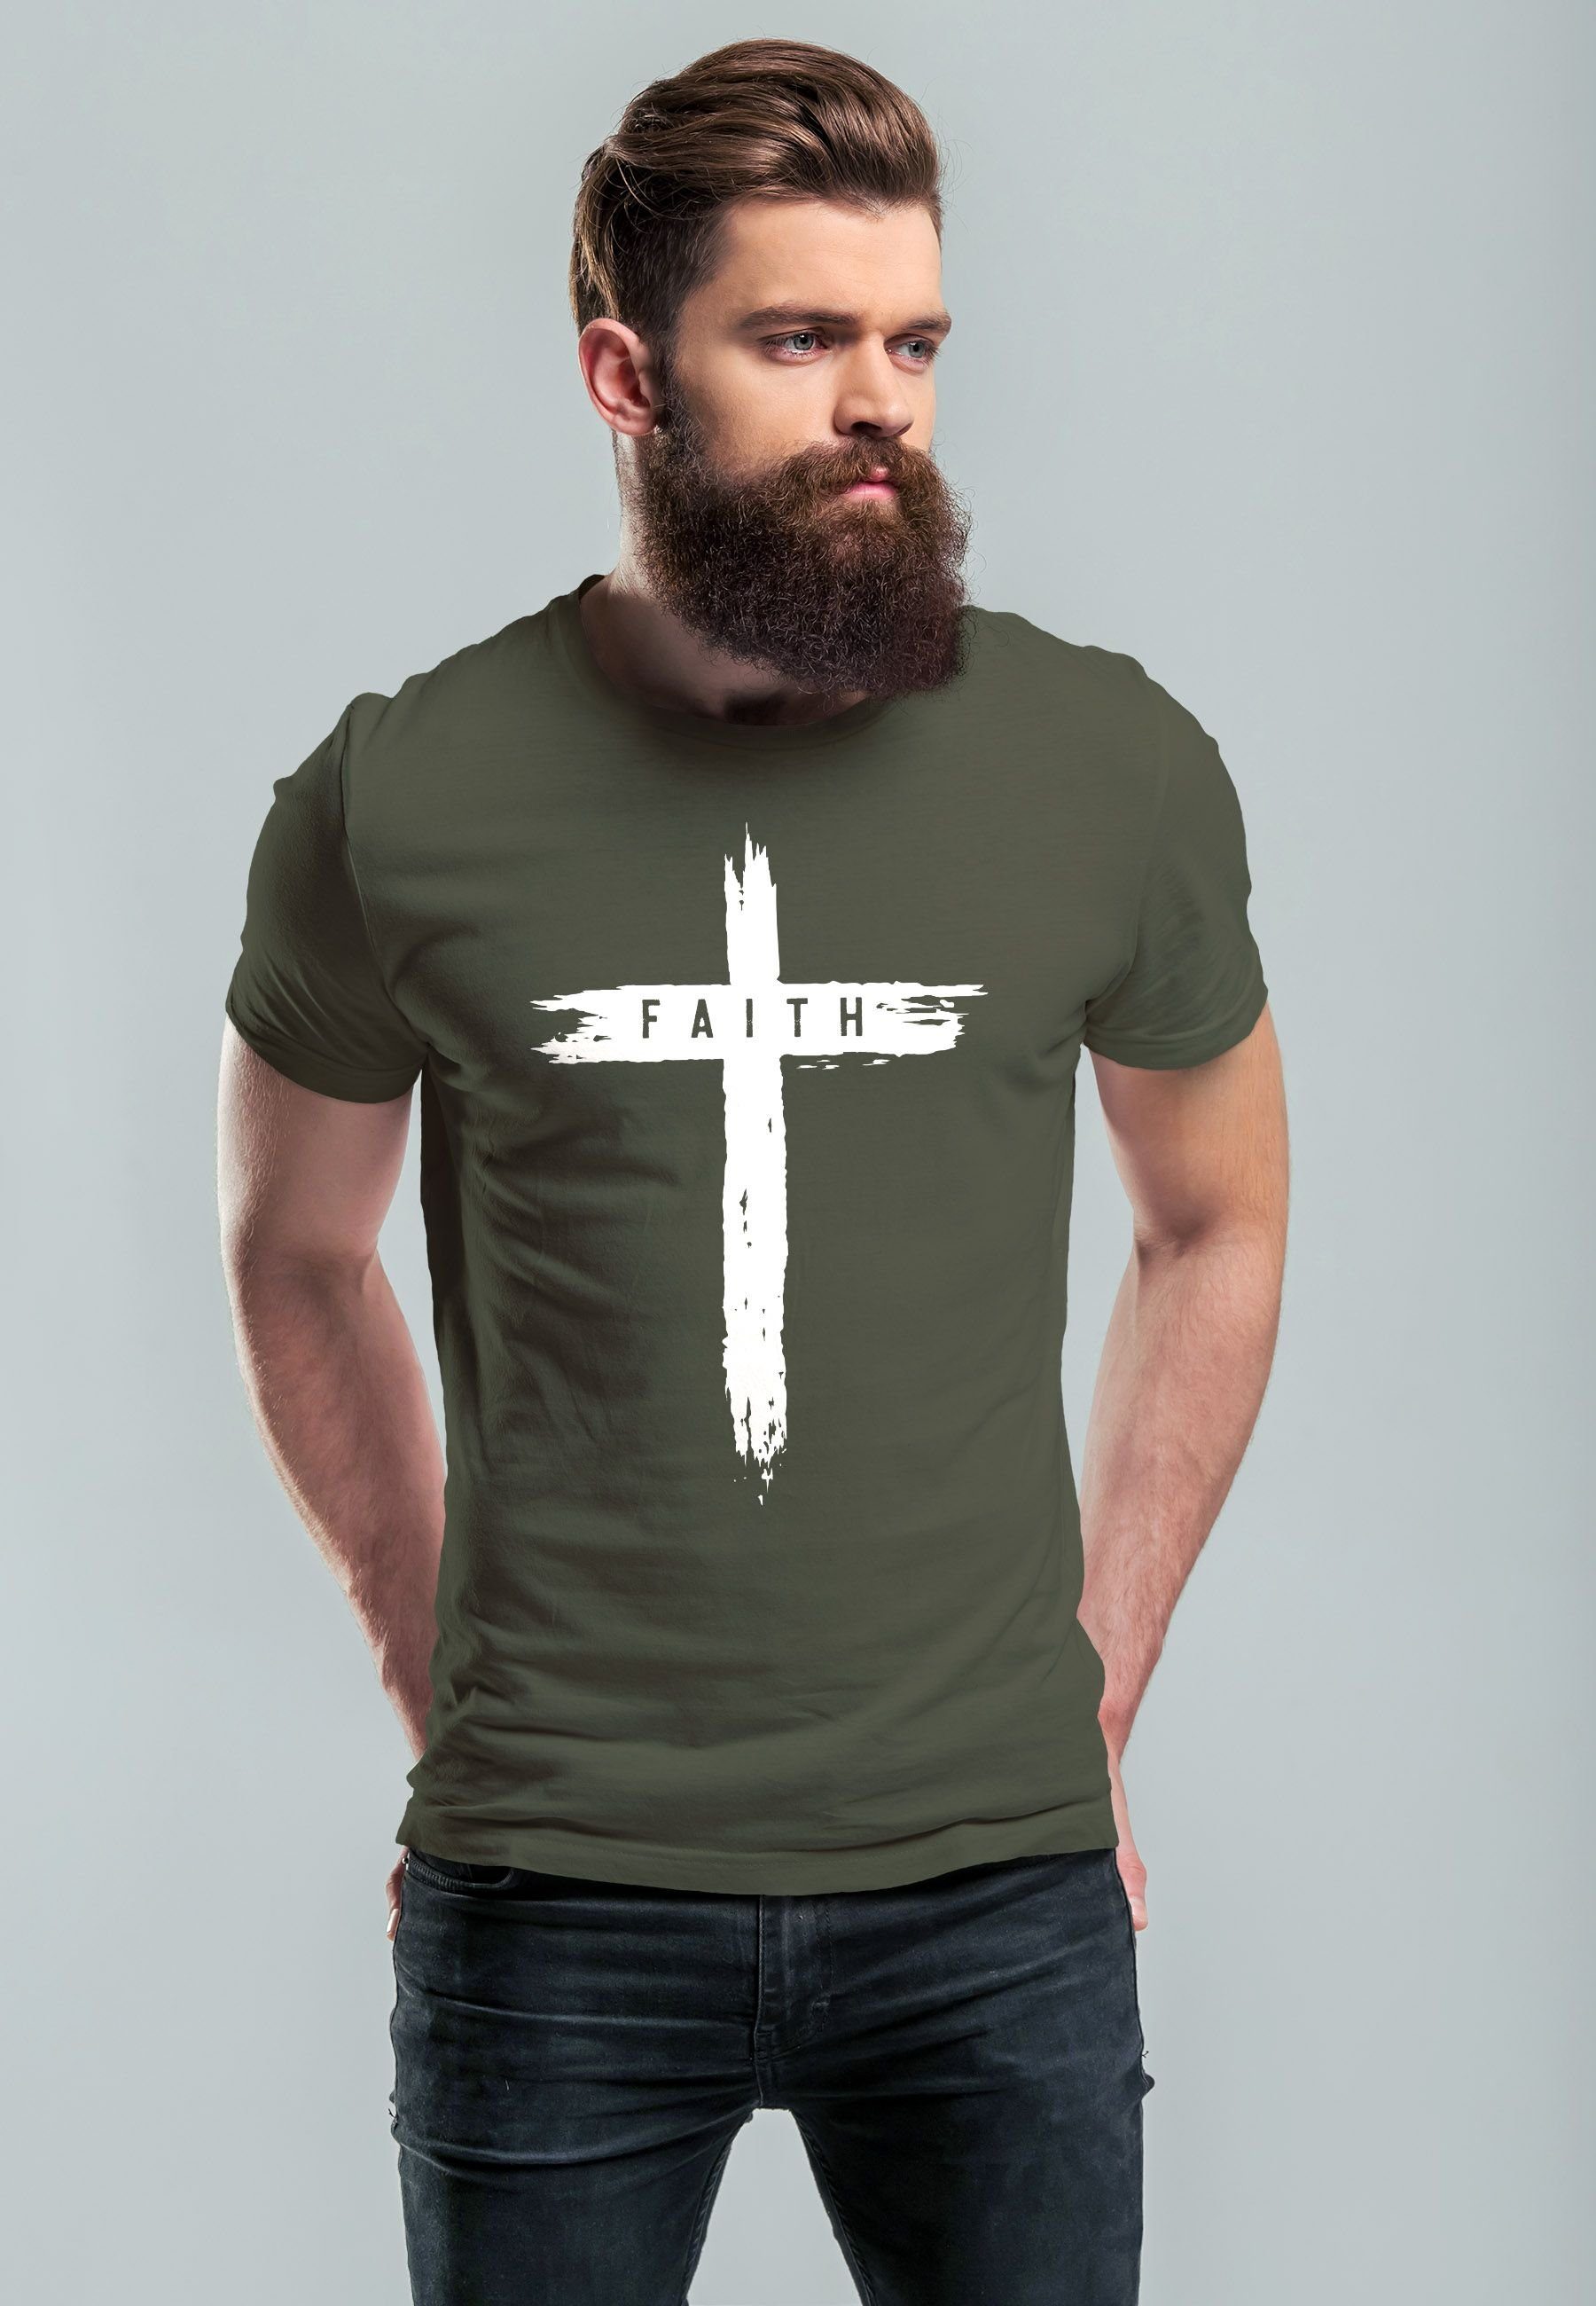 Neverless Print-Shirt Herren T-Shirt Aufdruck Cross Faith Printshirt mit Trend-Moti Print Glaube Kreuz army